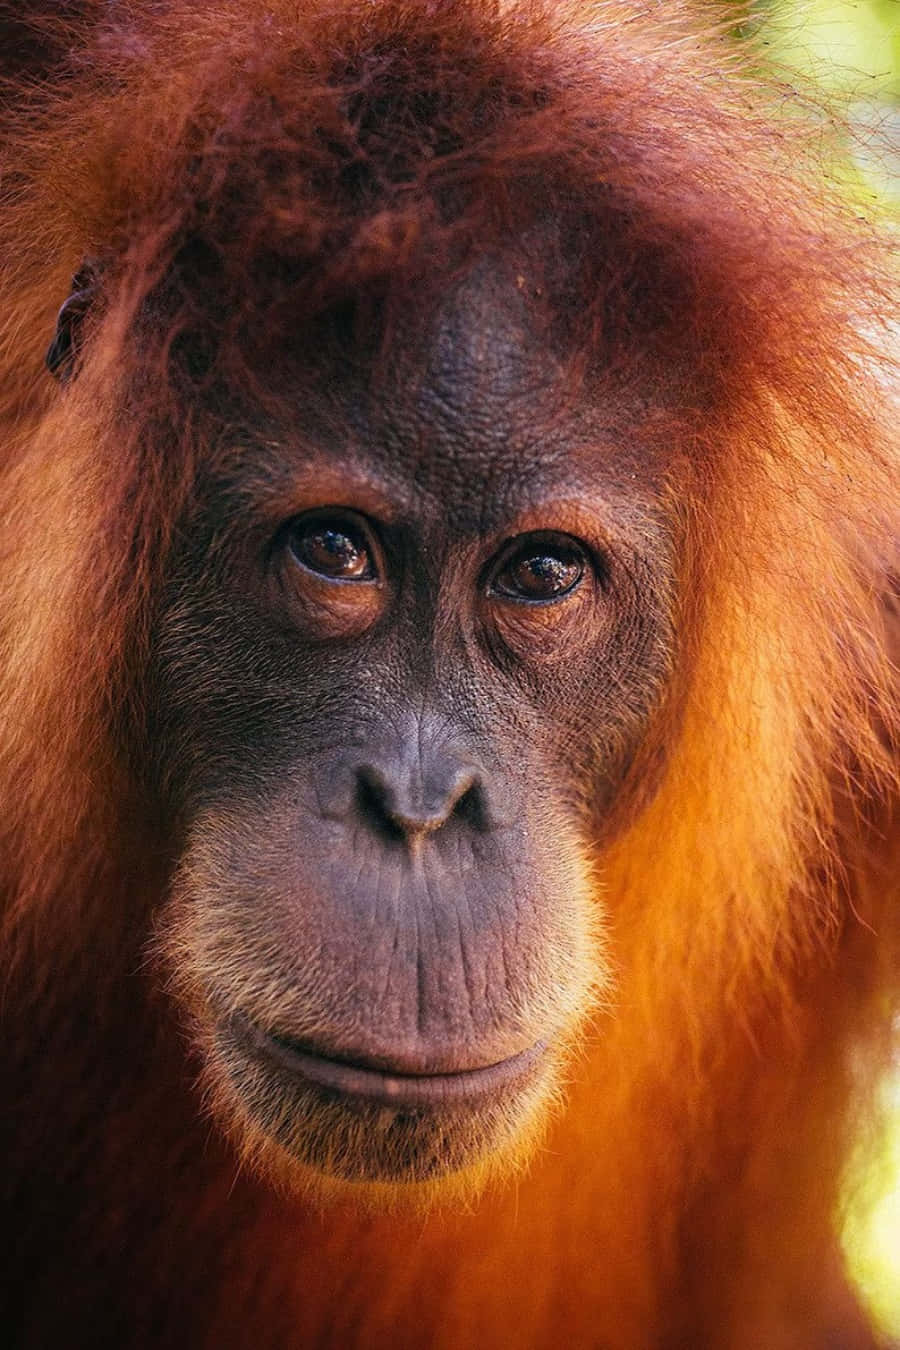 An Orangutan Relaxing in its Natural Habitat